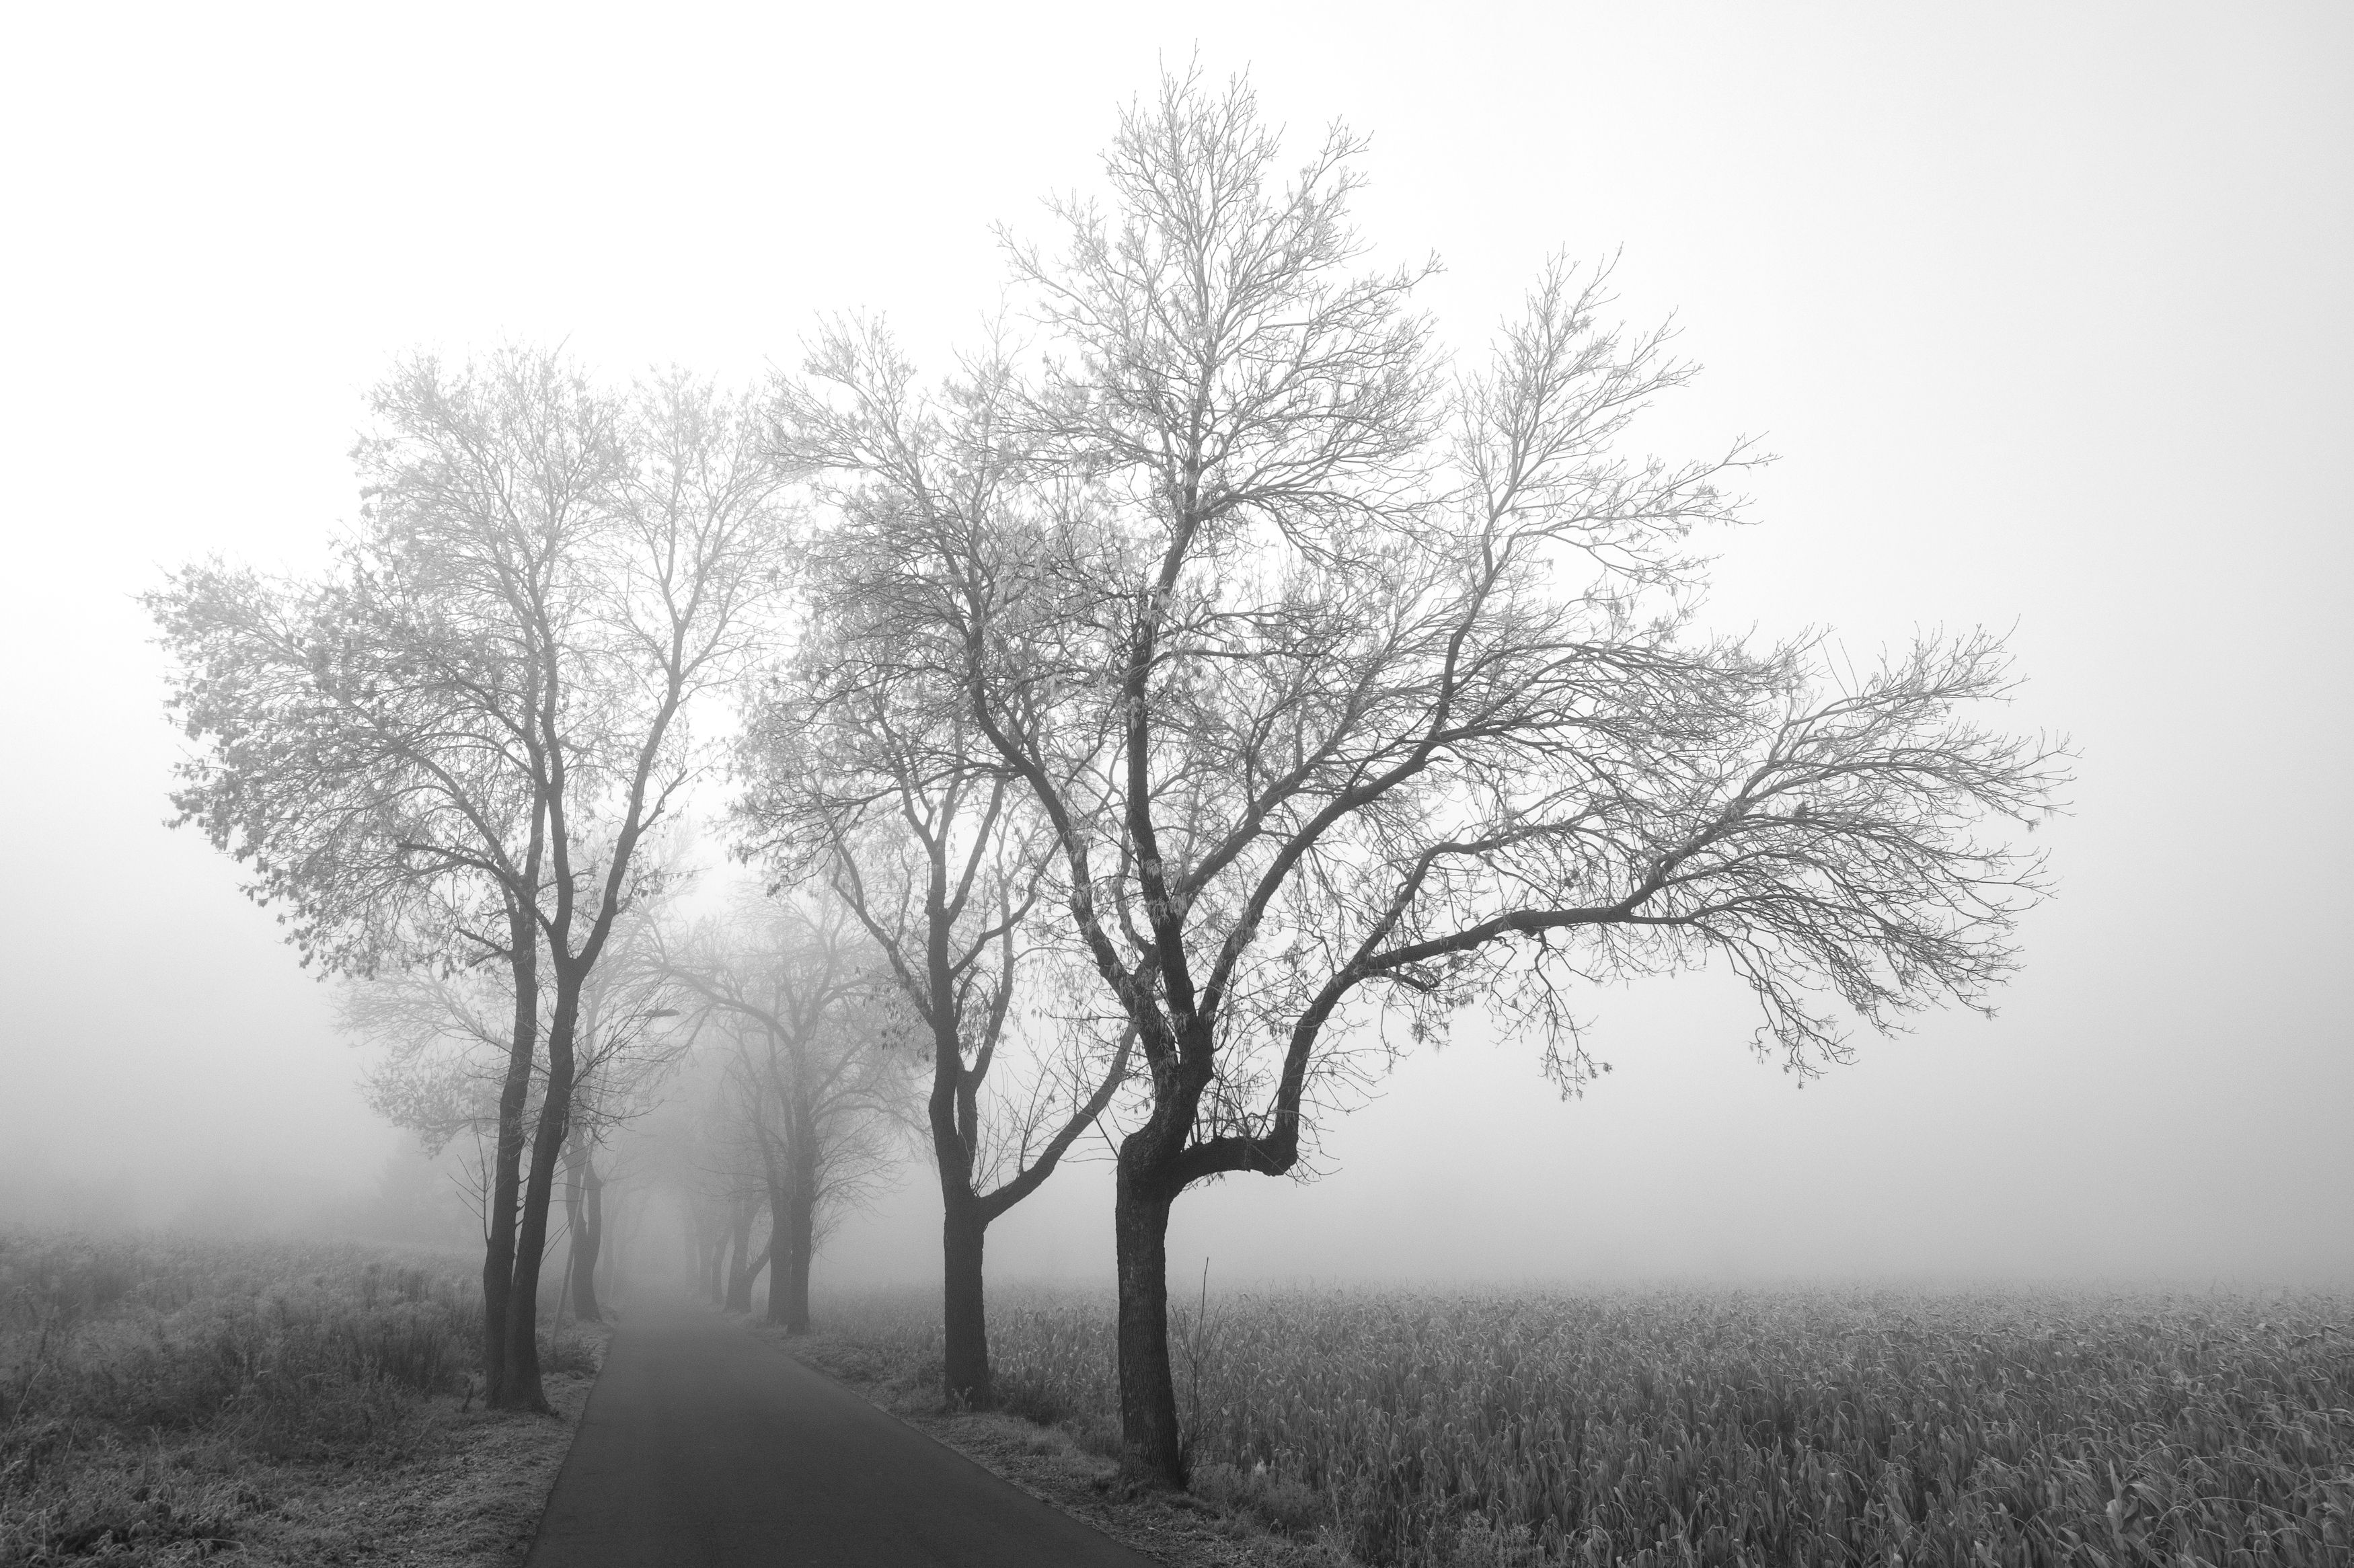 Trees, Road, Rural, Tree, Landscape, Fog, Nature, Tranquil, Black&White, Dark, Monochrome, Canon, EOSM5, Poland, Damian Cyfka